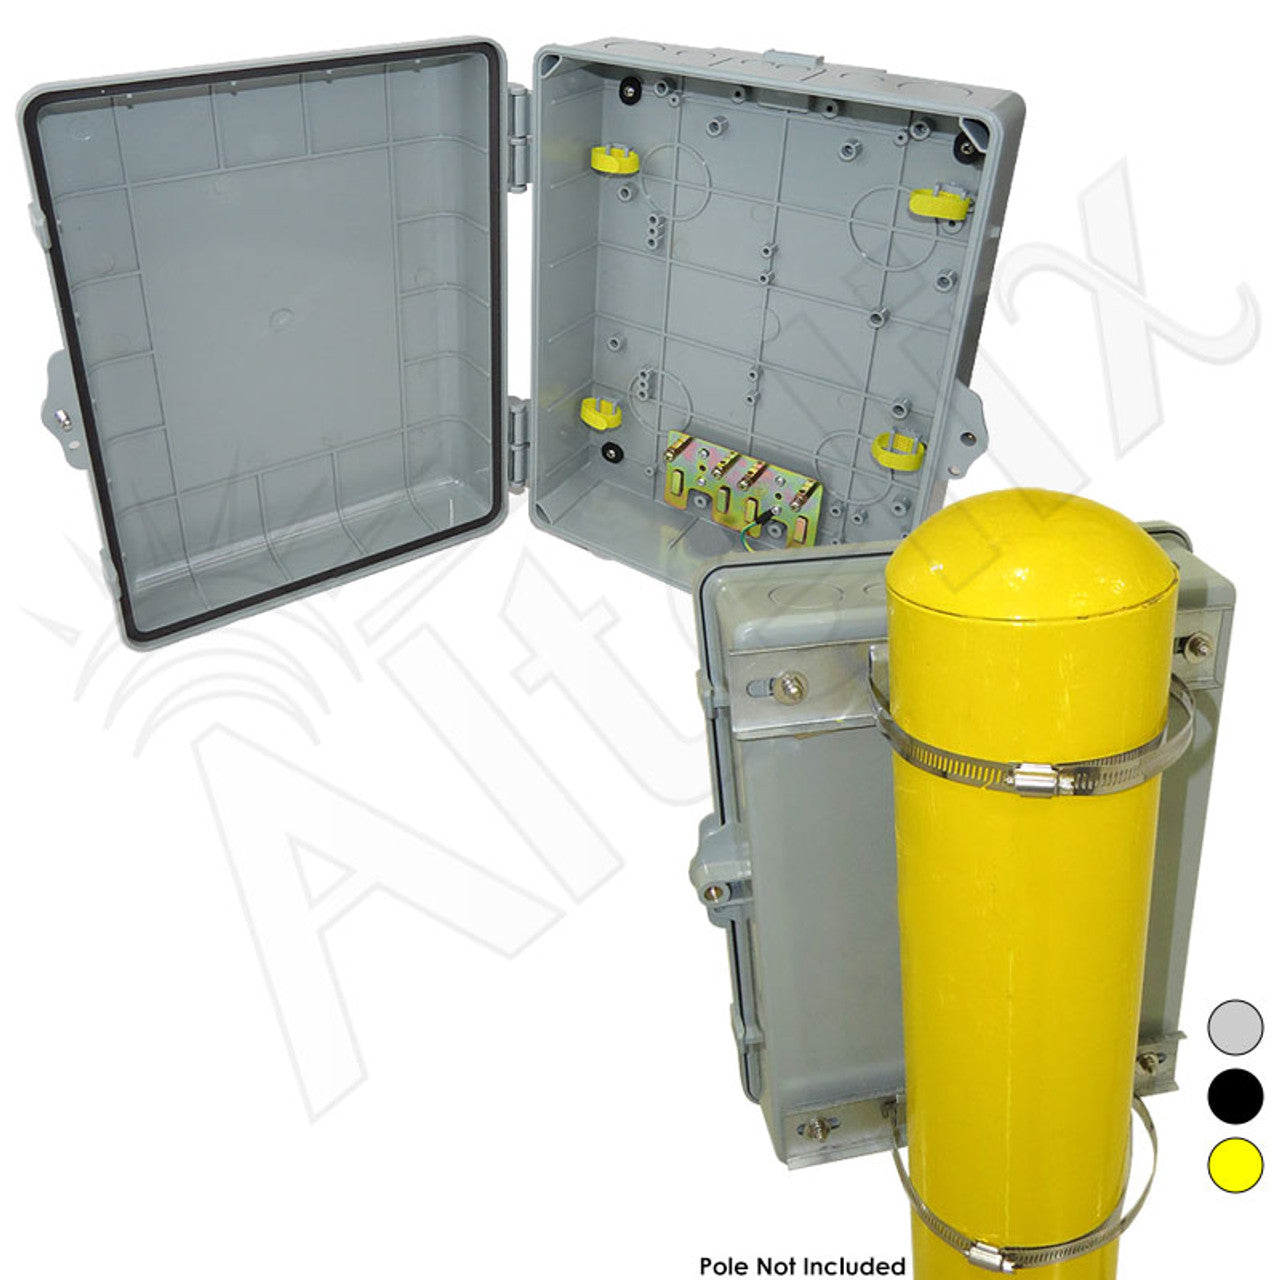 Altelix 14x11x5 PC + ABS Weatherproof Utility Box NEMA Enclosure with Pole Mount Kit-1